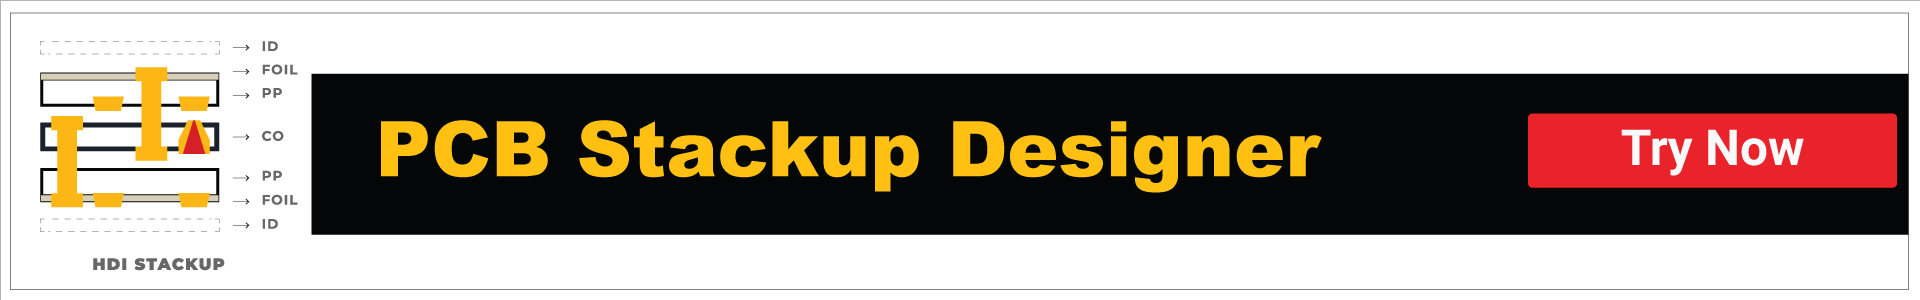 stackup-designer-blog-banner.jpg